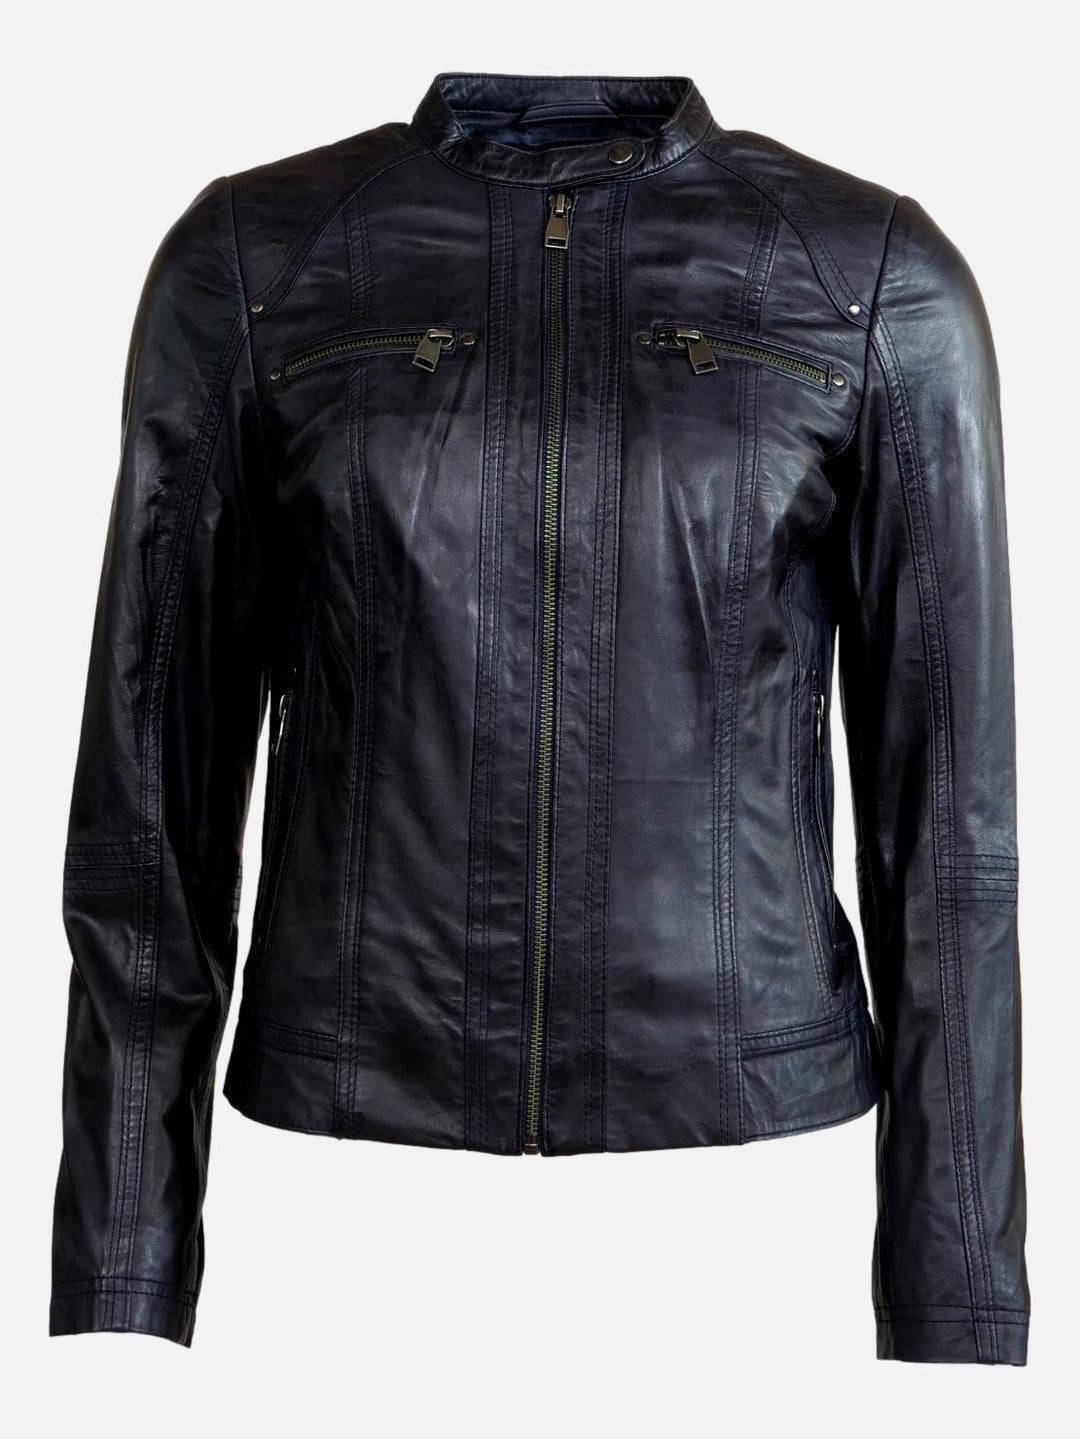 Previa - Comfort - Lamb Malli Leather - Jacket - Women - Navy